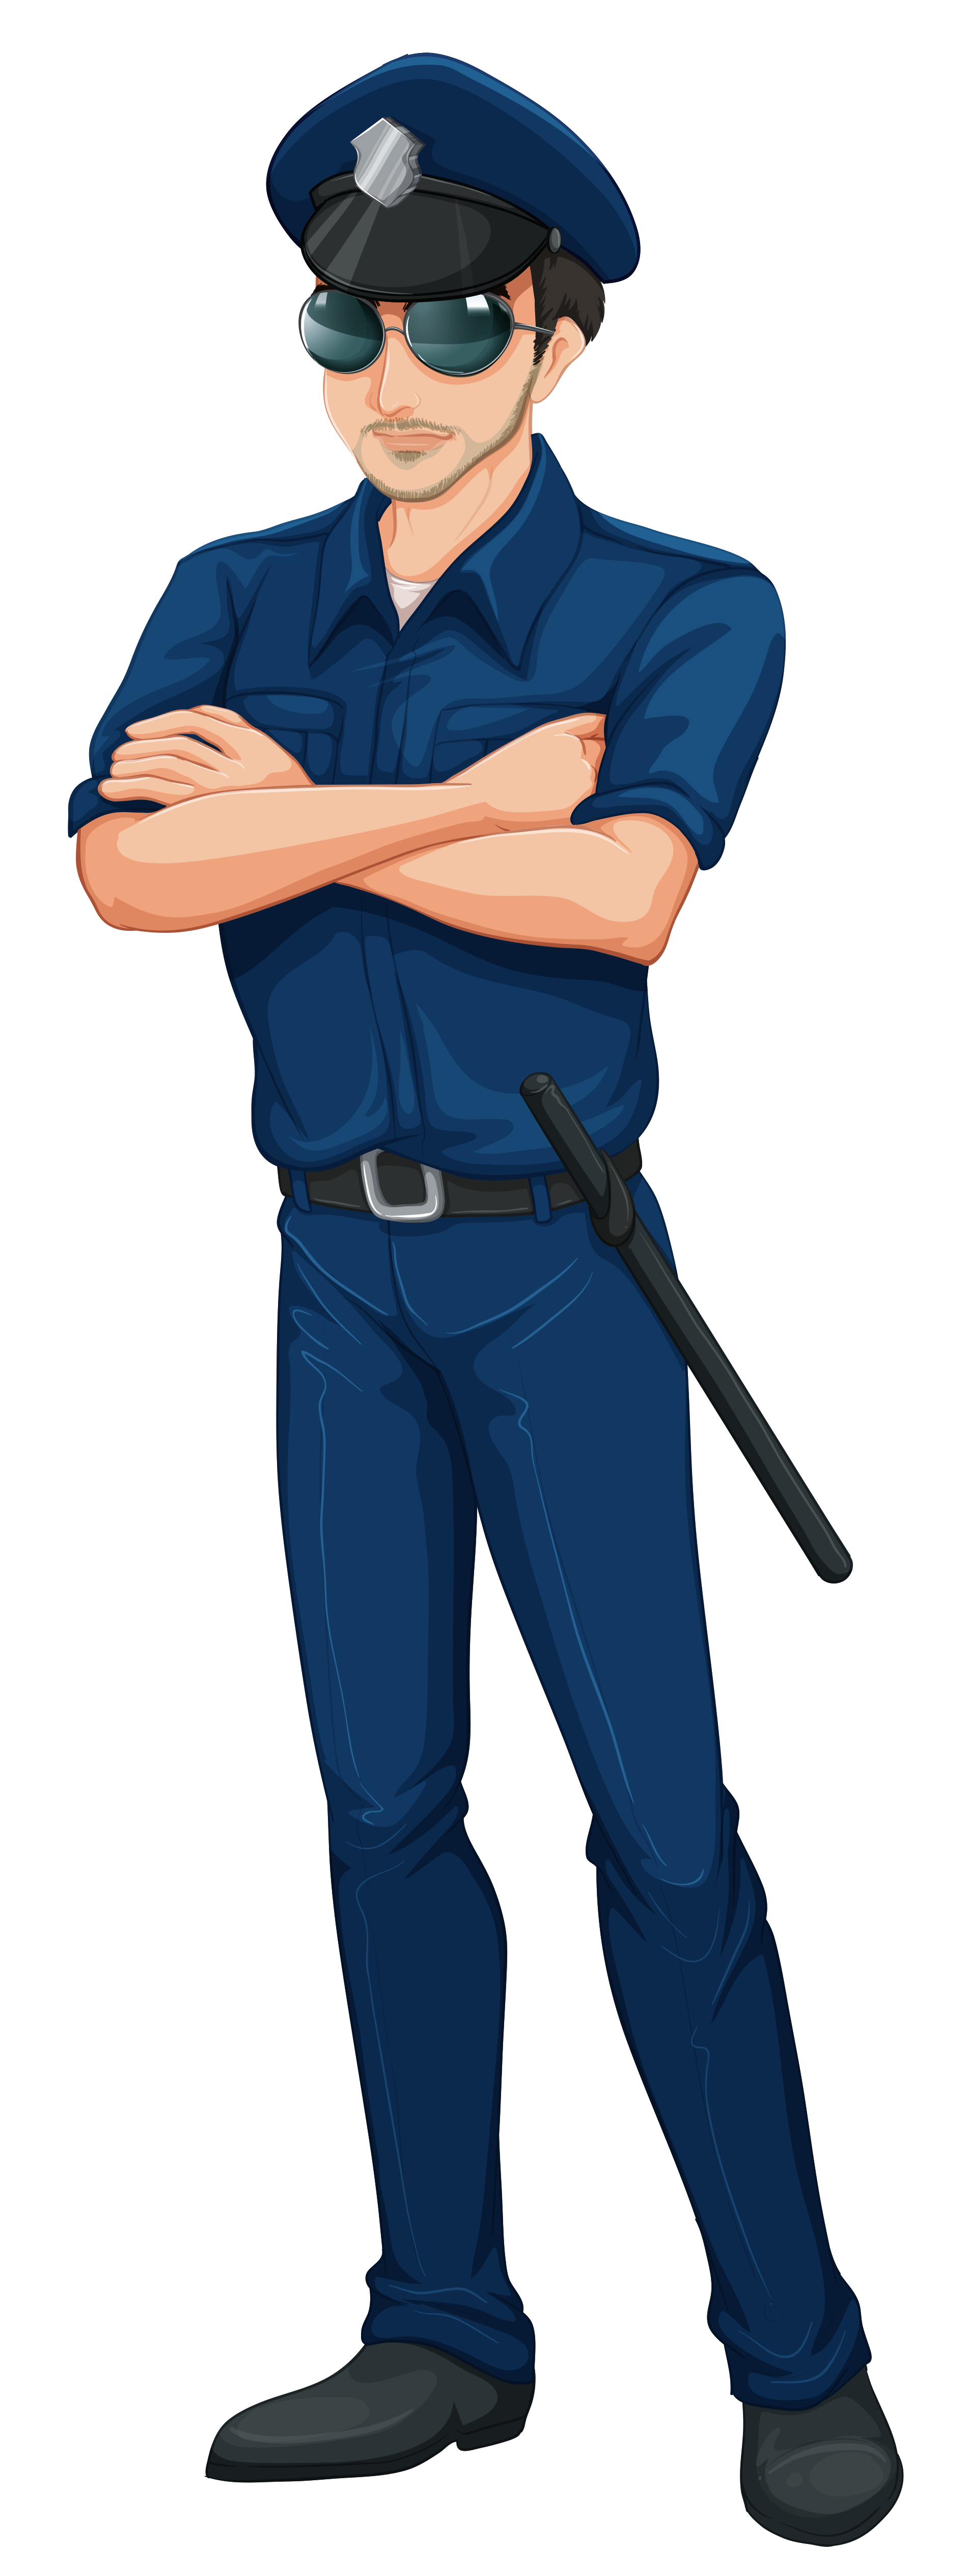 Cop Policeman PNG Clip Art Image 